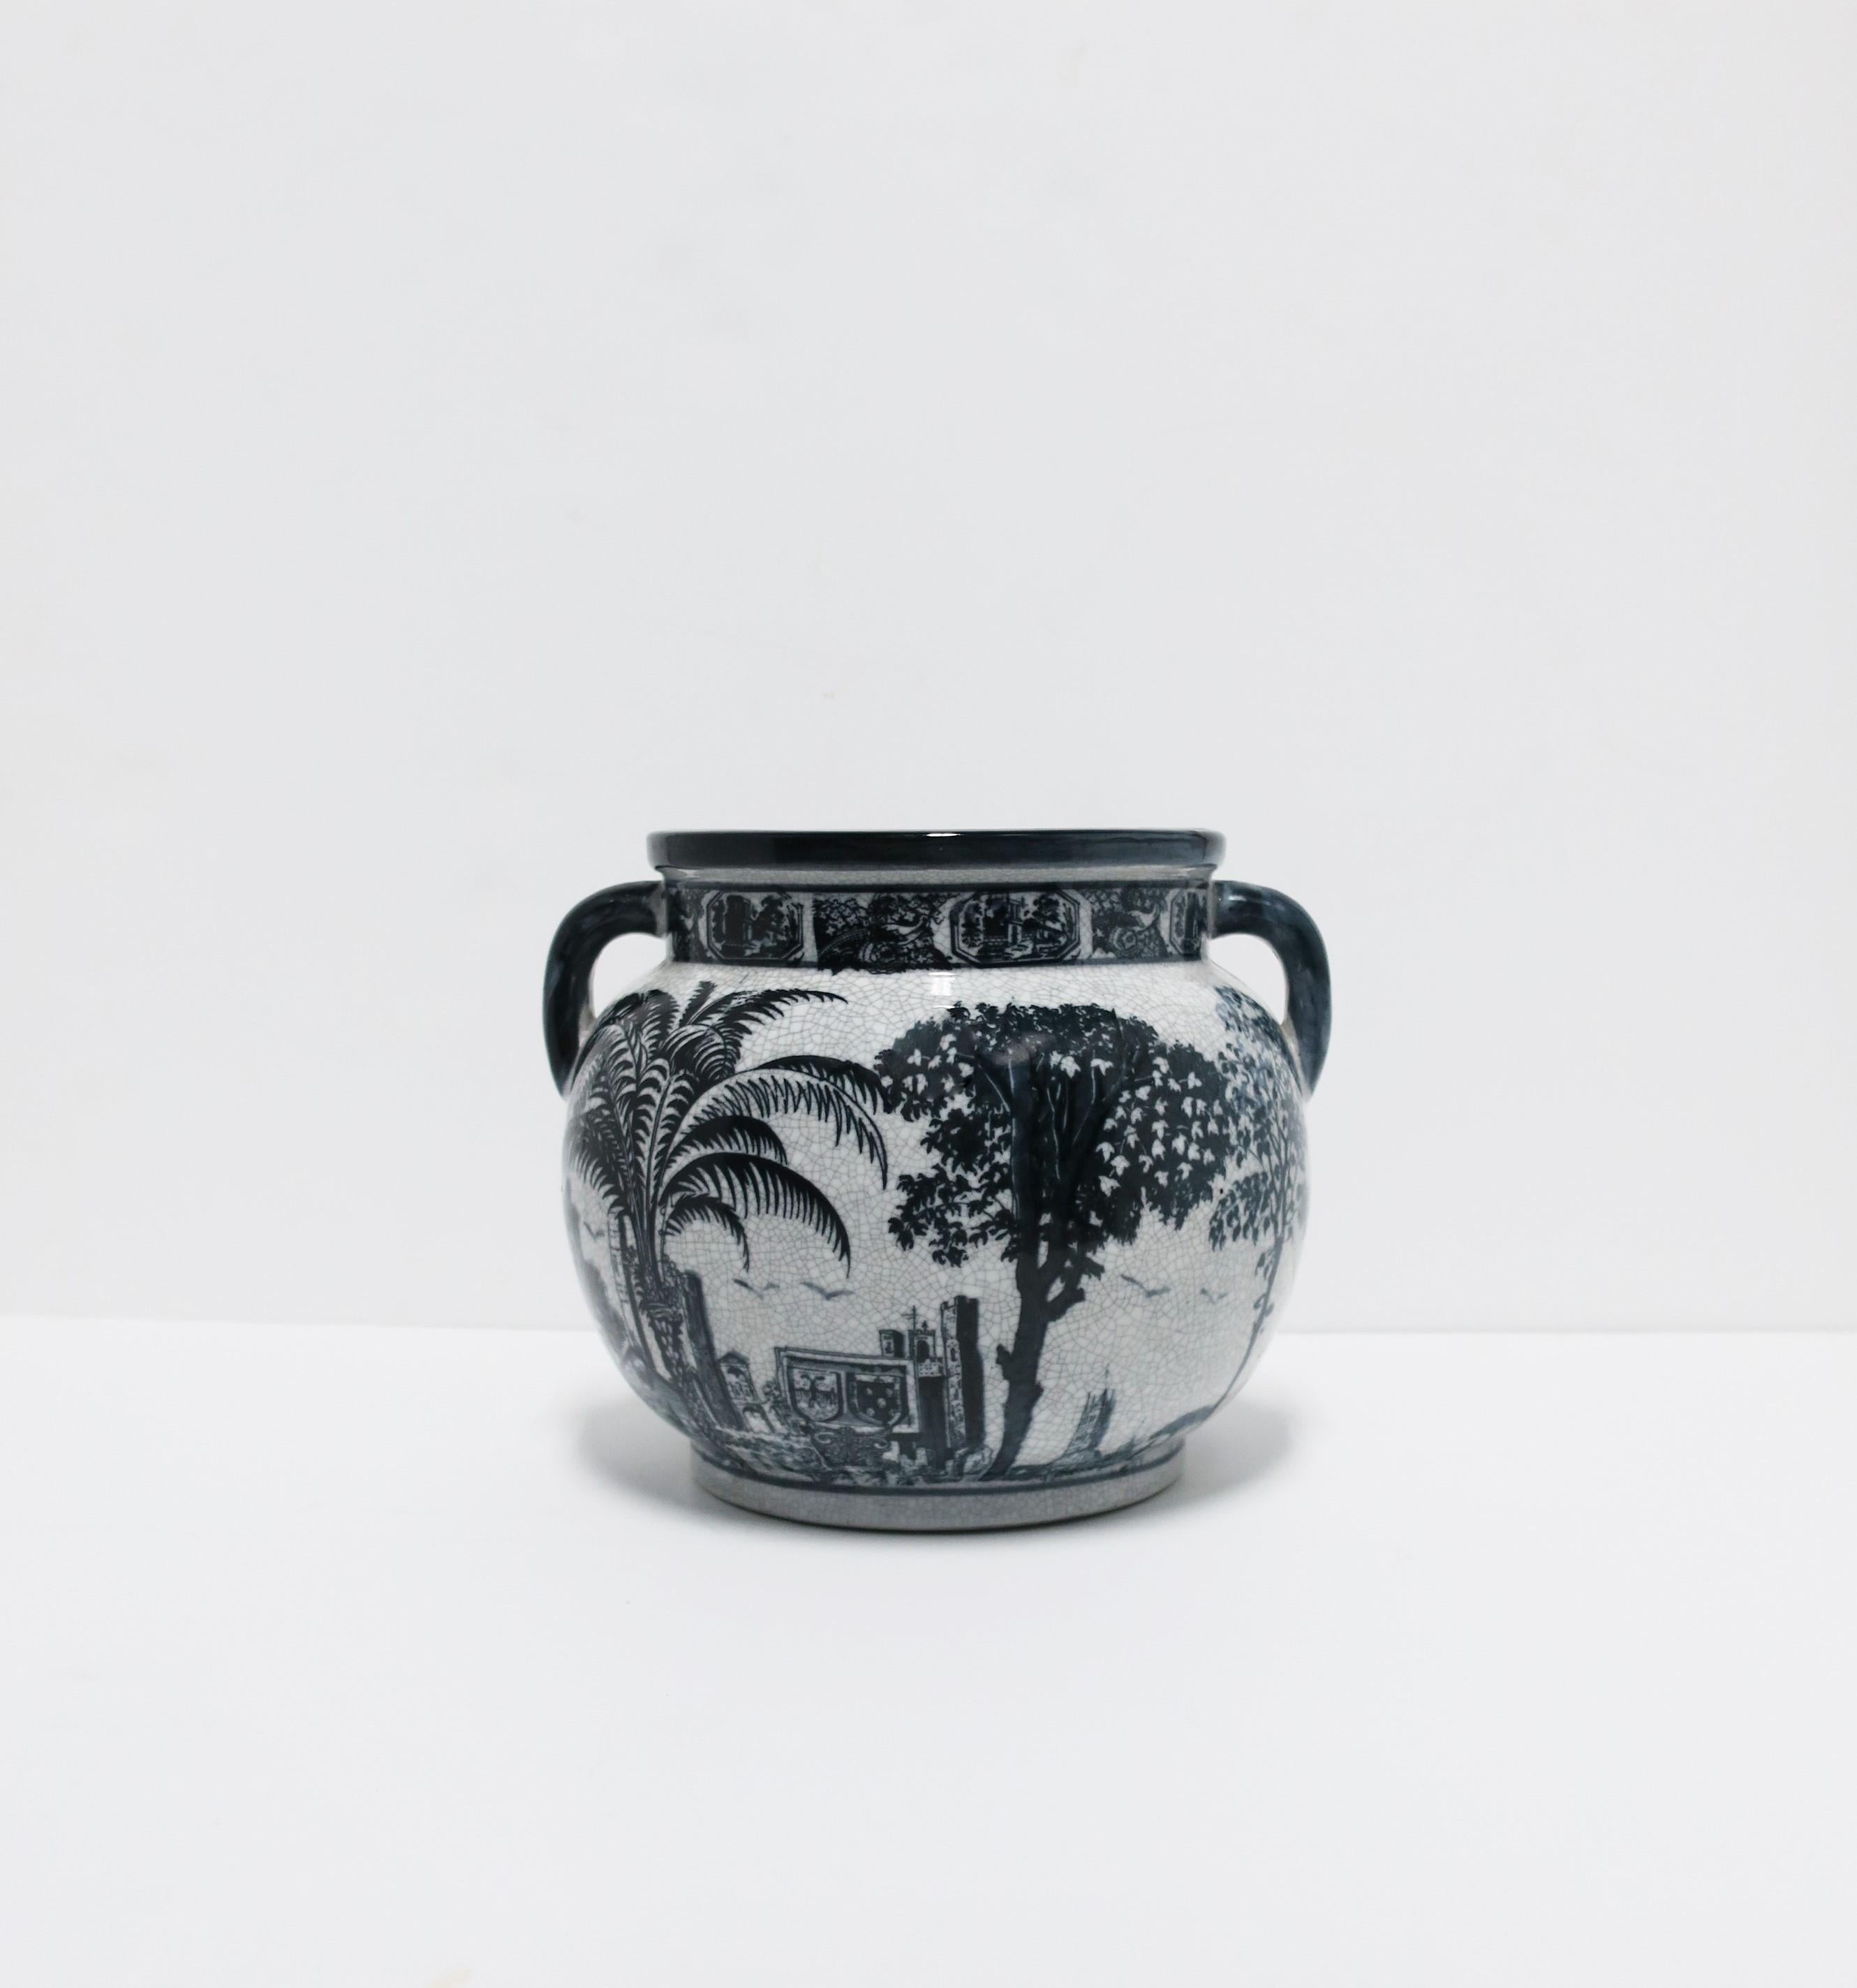 Glazed Black and White 'Toile' Ceramic Cachepot Jardinière Plant Pot Holder